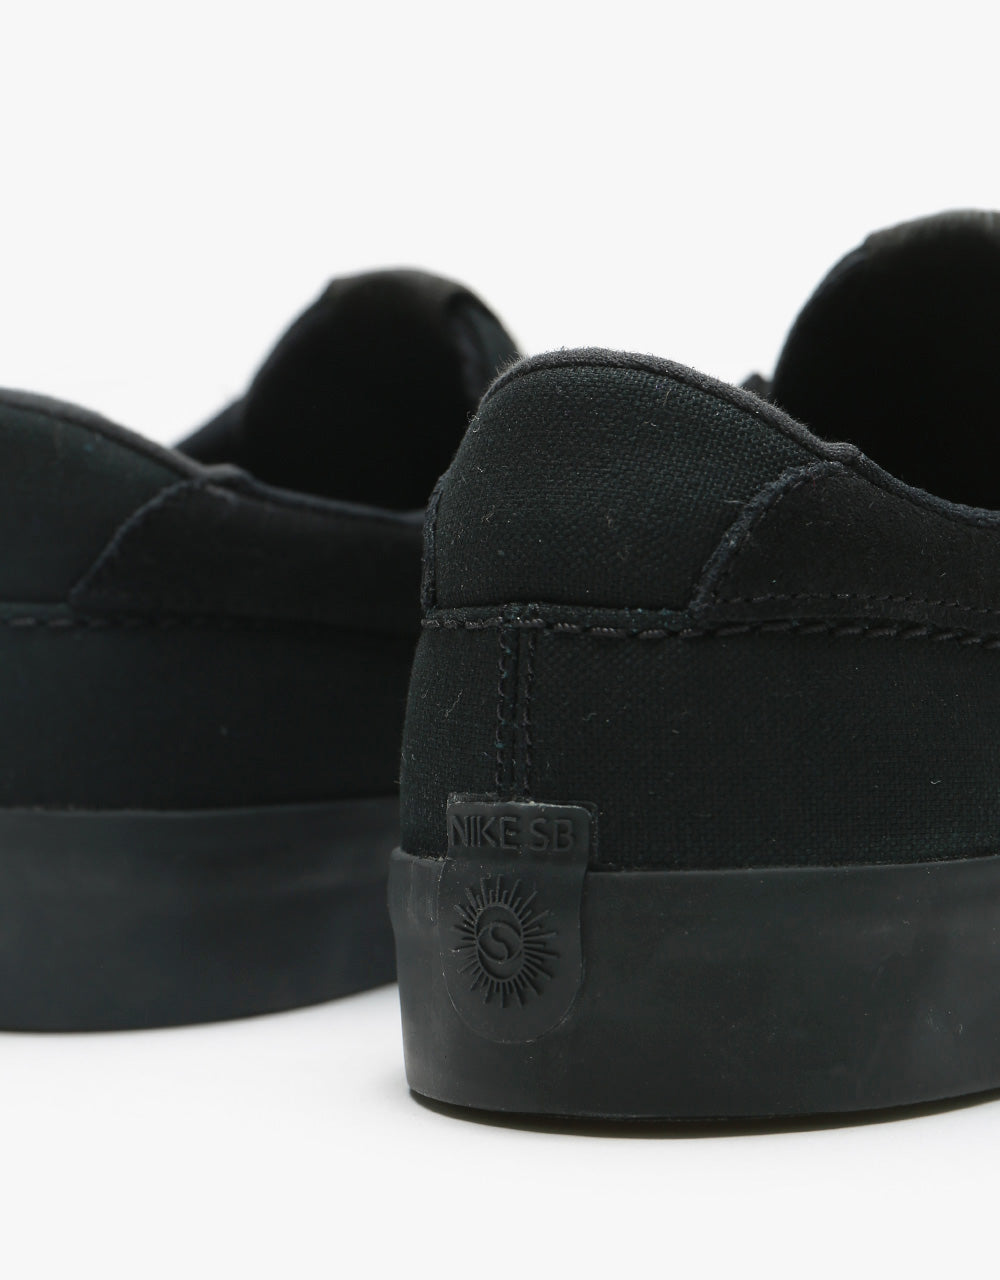 Nike SB Shane Skate Shoes - Black/Black-Black-Black